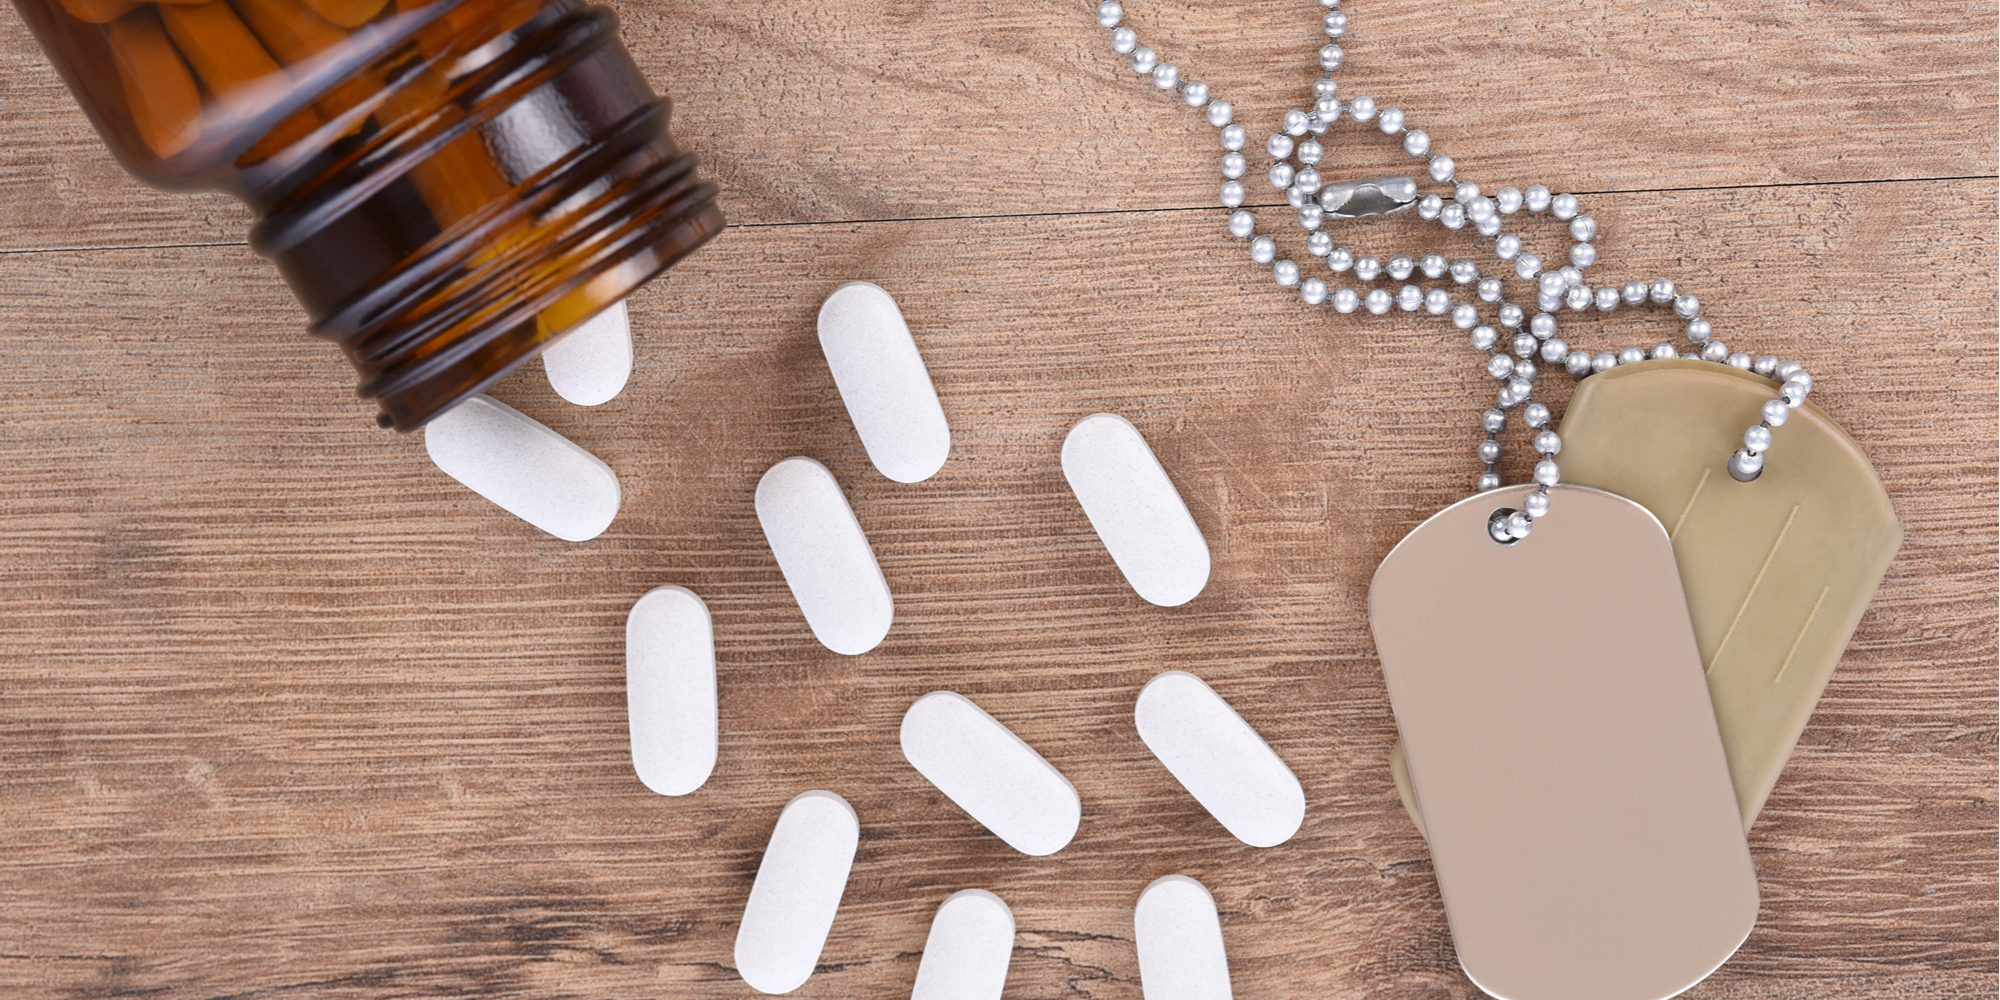 Fake Percocet: Spotting Fake Prescription Drugs